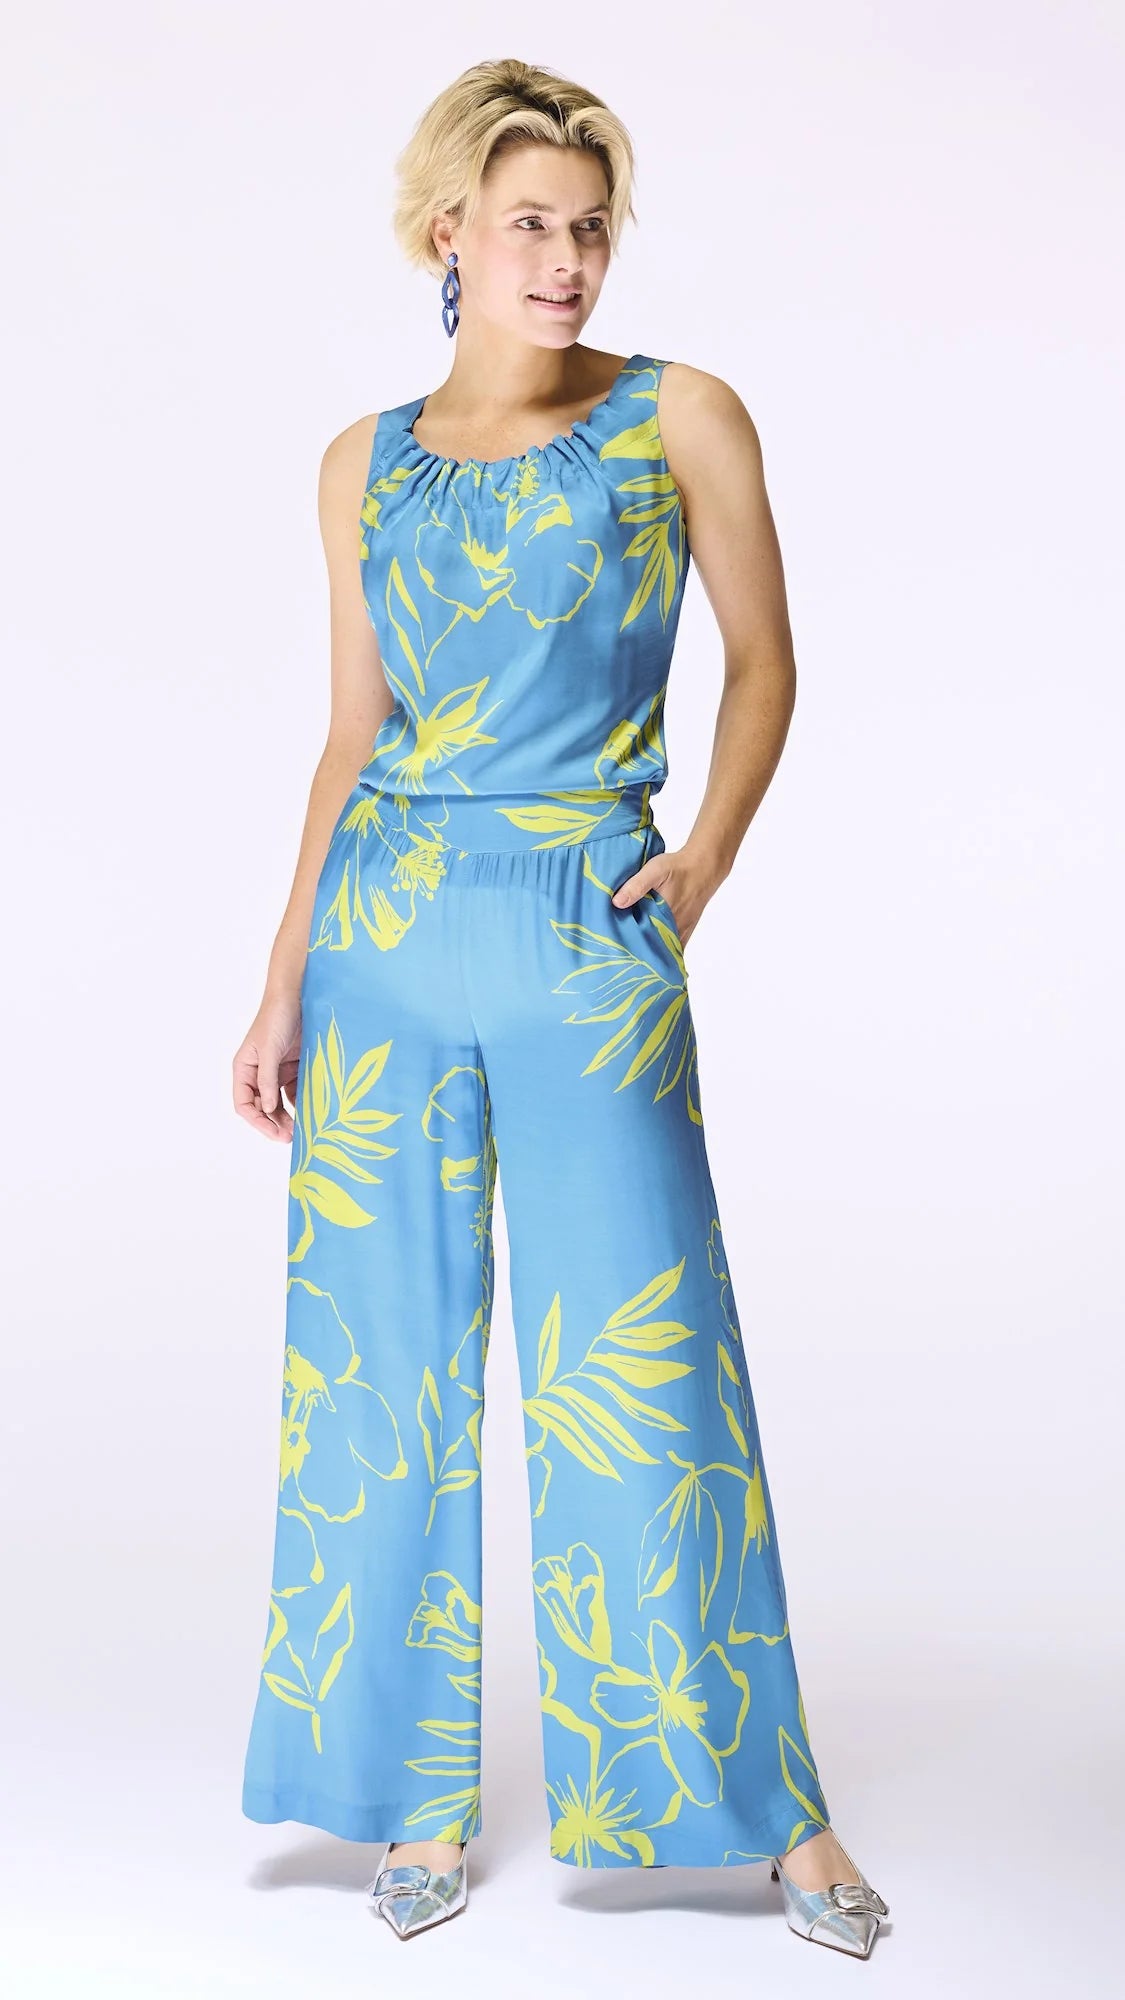 Bloes Blauw Accent Fashion ( Parasol 5308/63 )